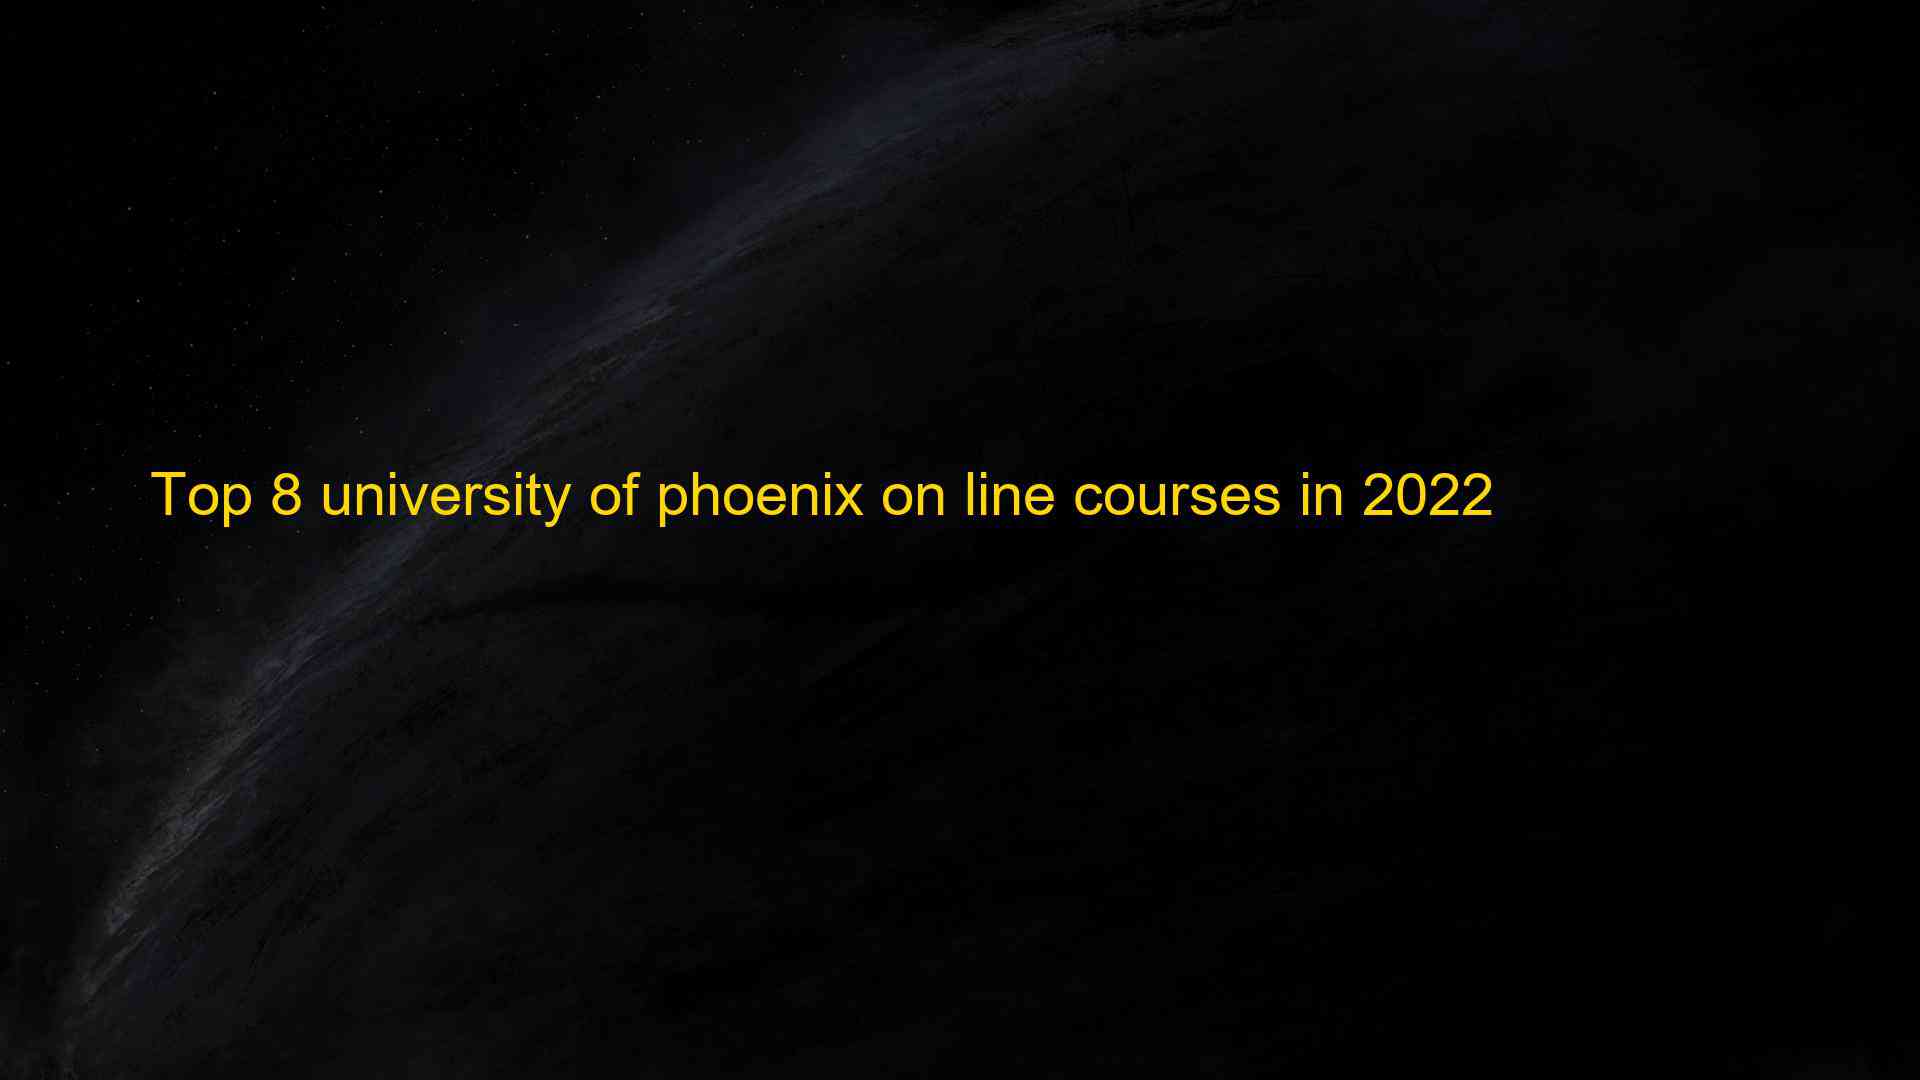 Top 8 university of phoenix on line courses in 2022 1661935223